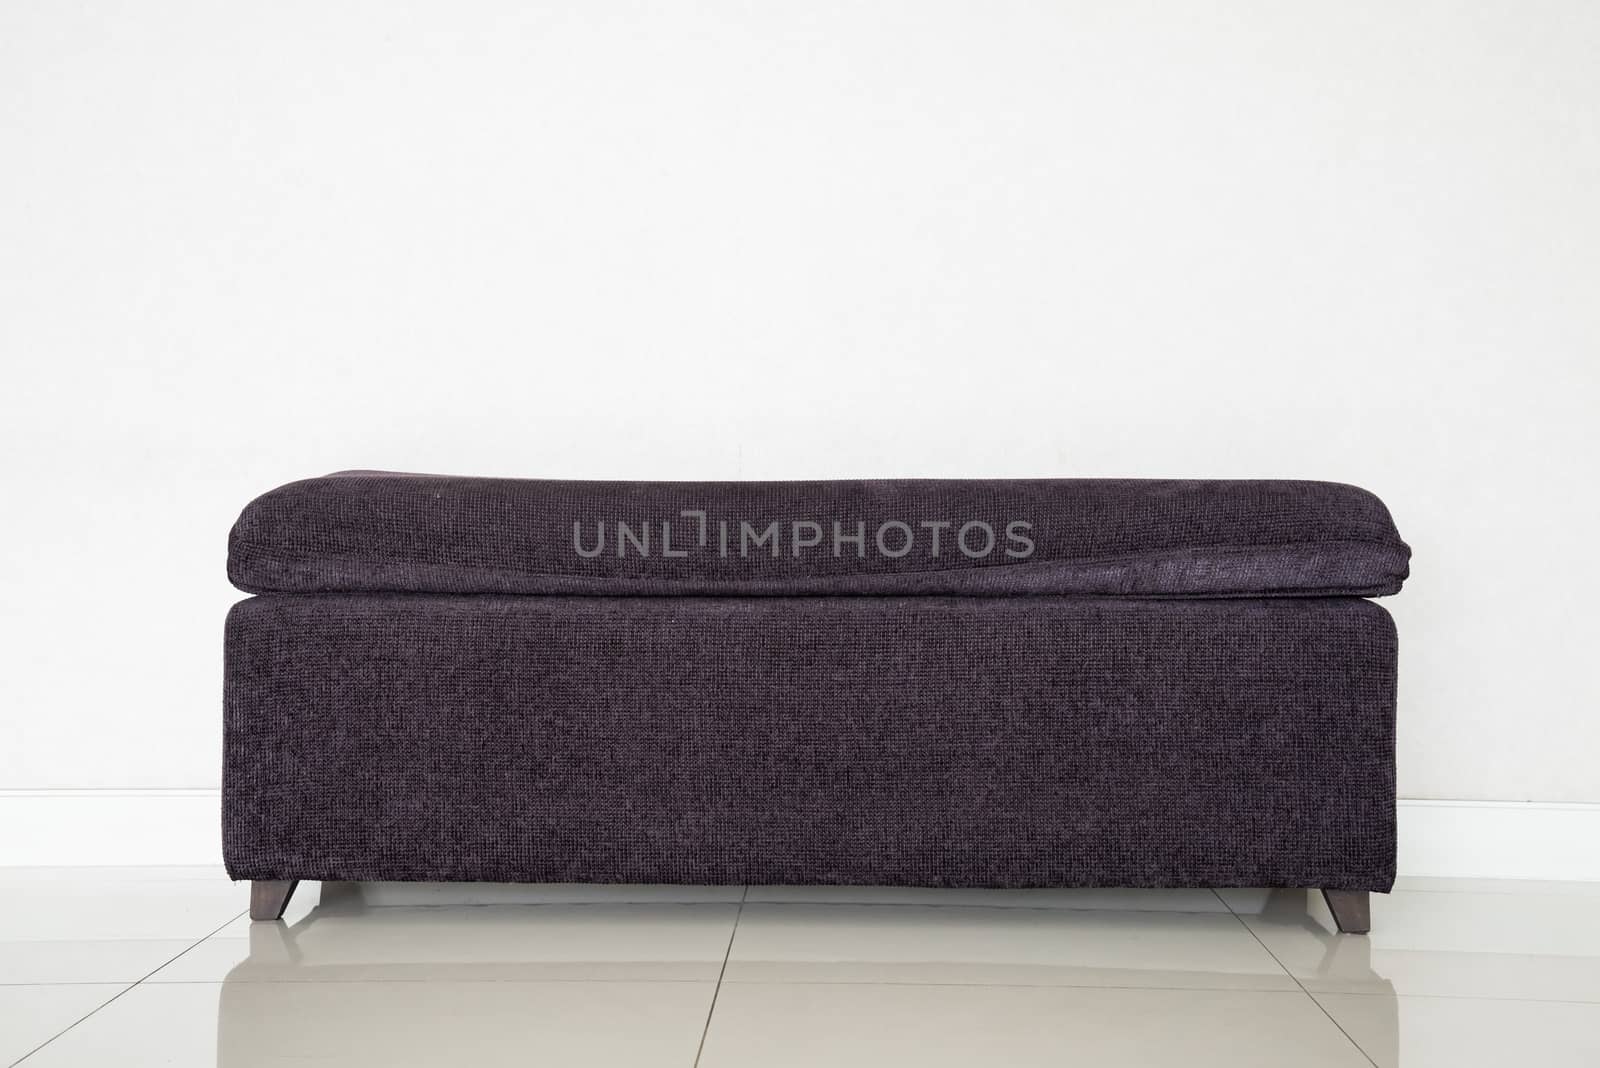 sofa furniture isolated on white background